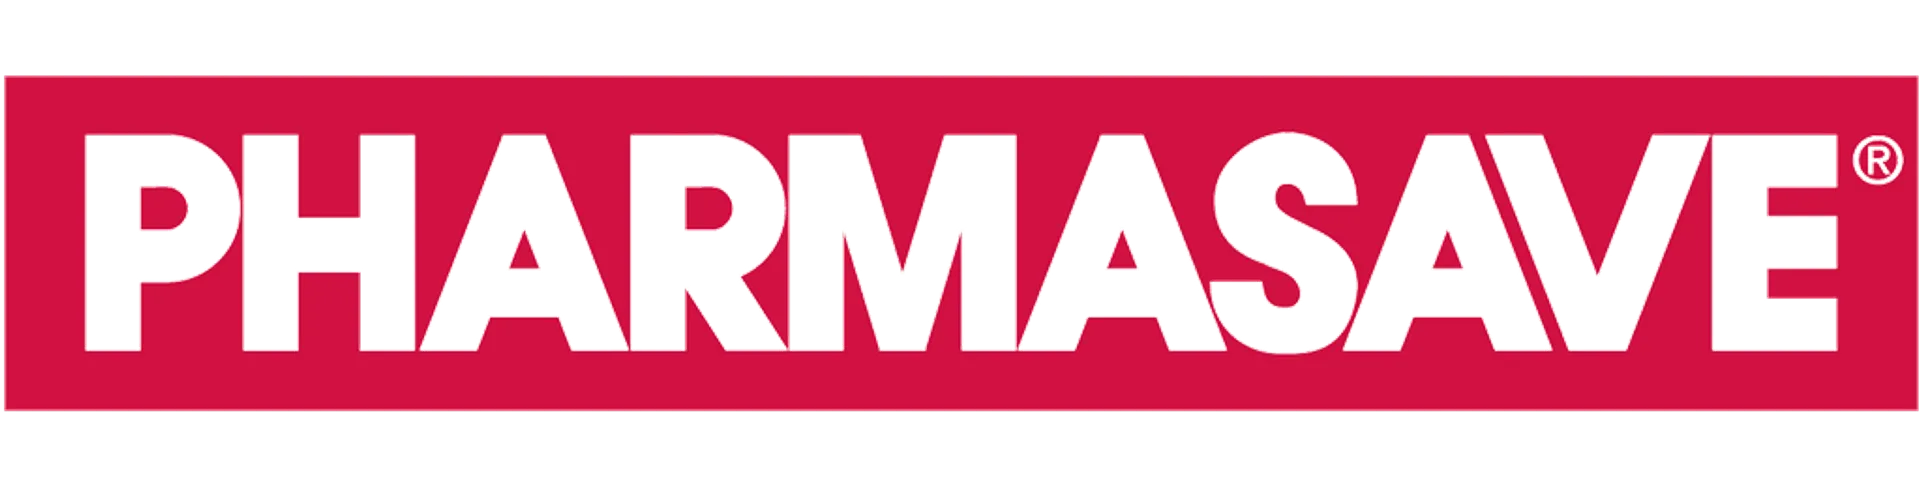 PHARMASAVE logo of current flyer